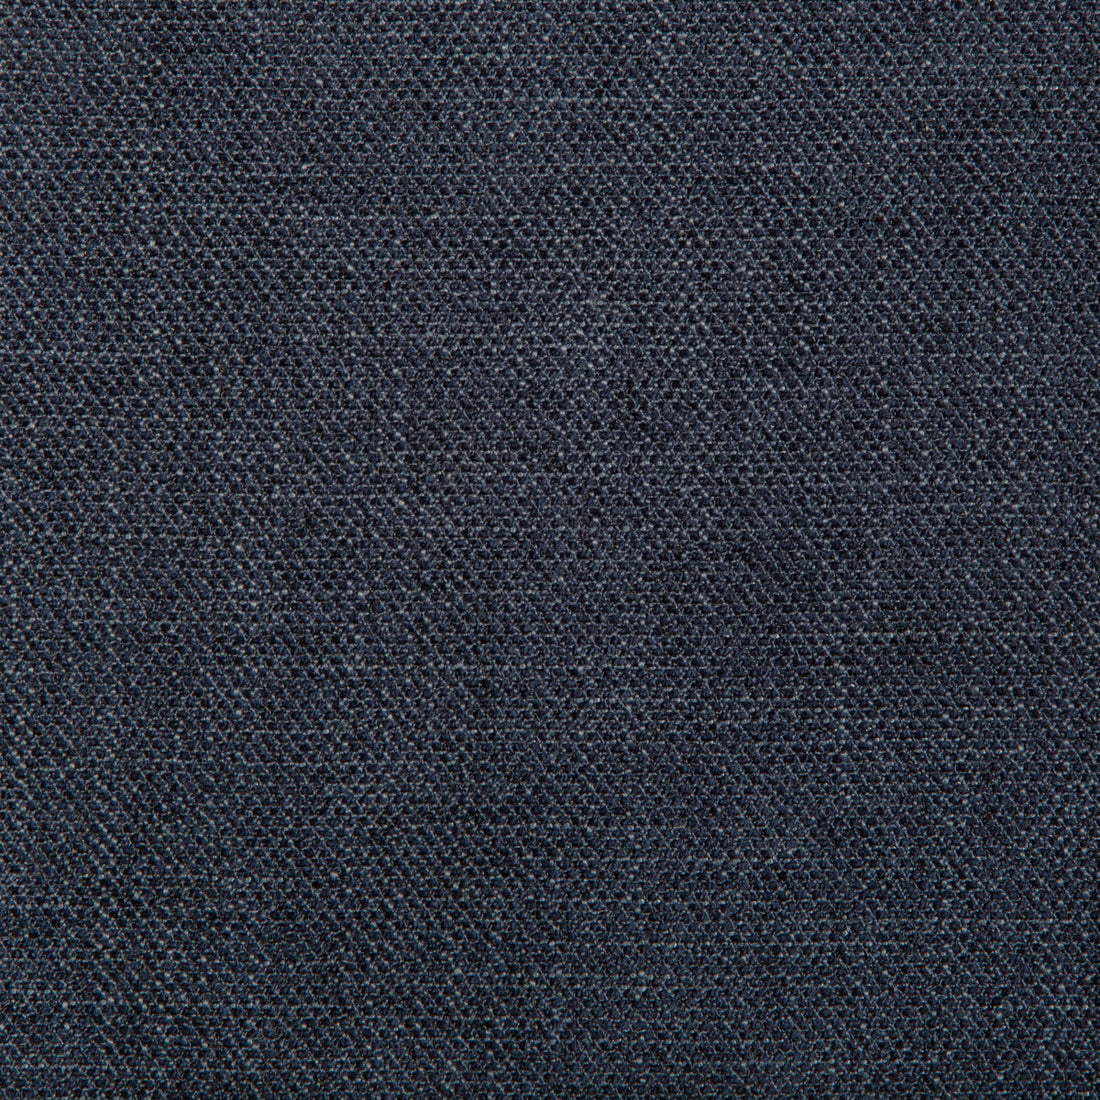 Kf Smt fabric - pattern 35060.50.0 - by Kravet Smart in the Performance Kravetarmor collection